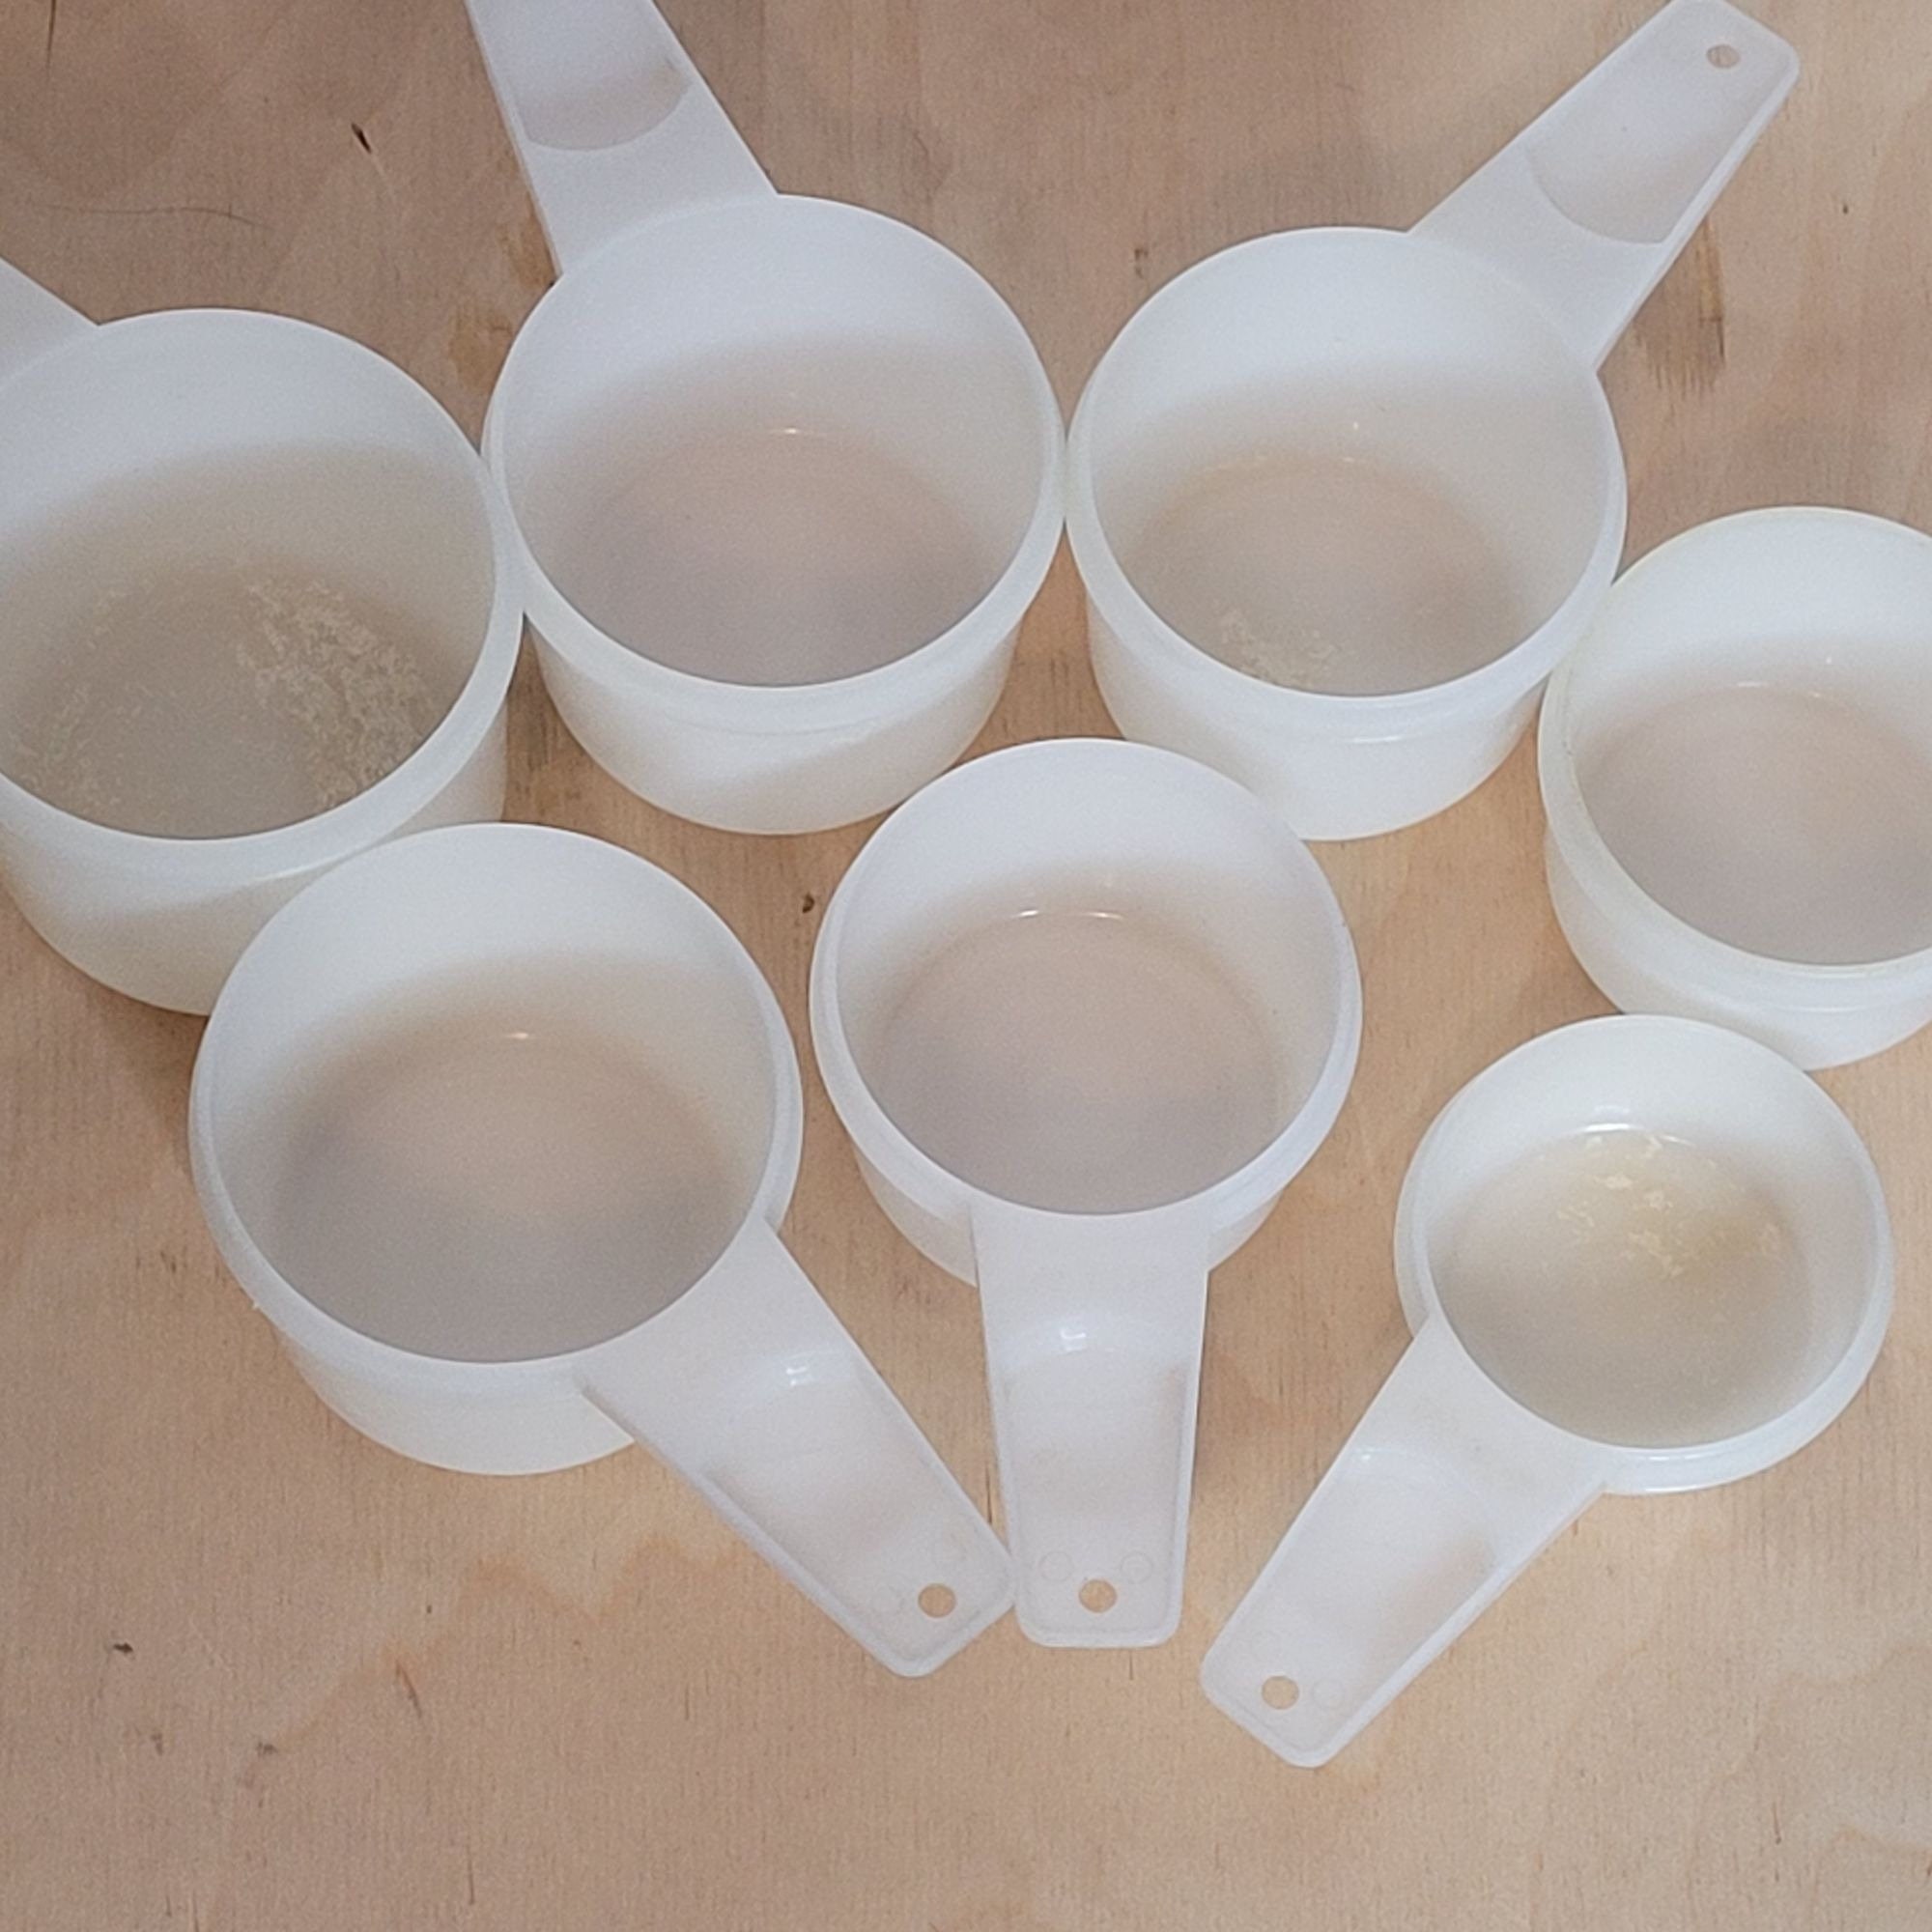 Vintage Tupperware Measuring Cups Set Multi Colored 5 Pieces